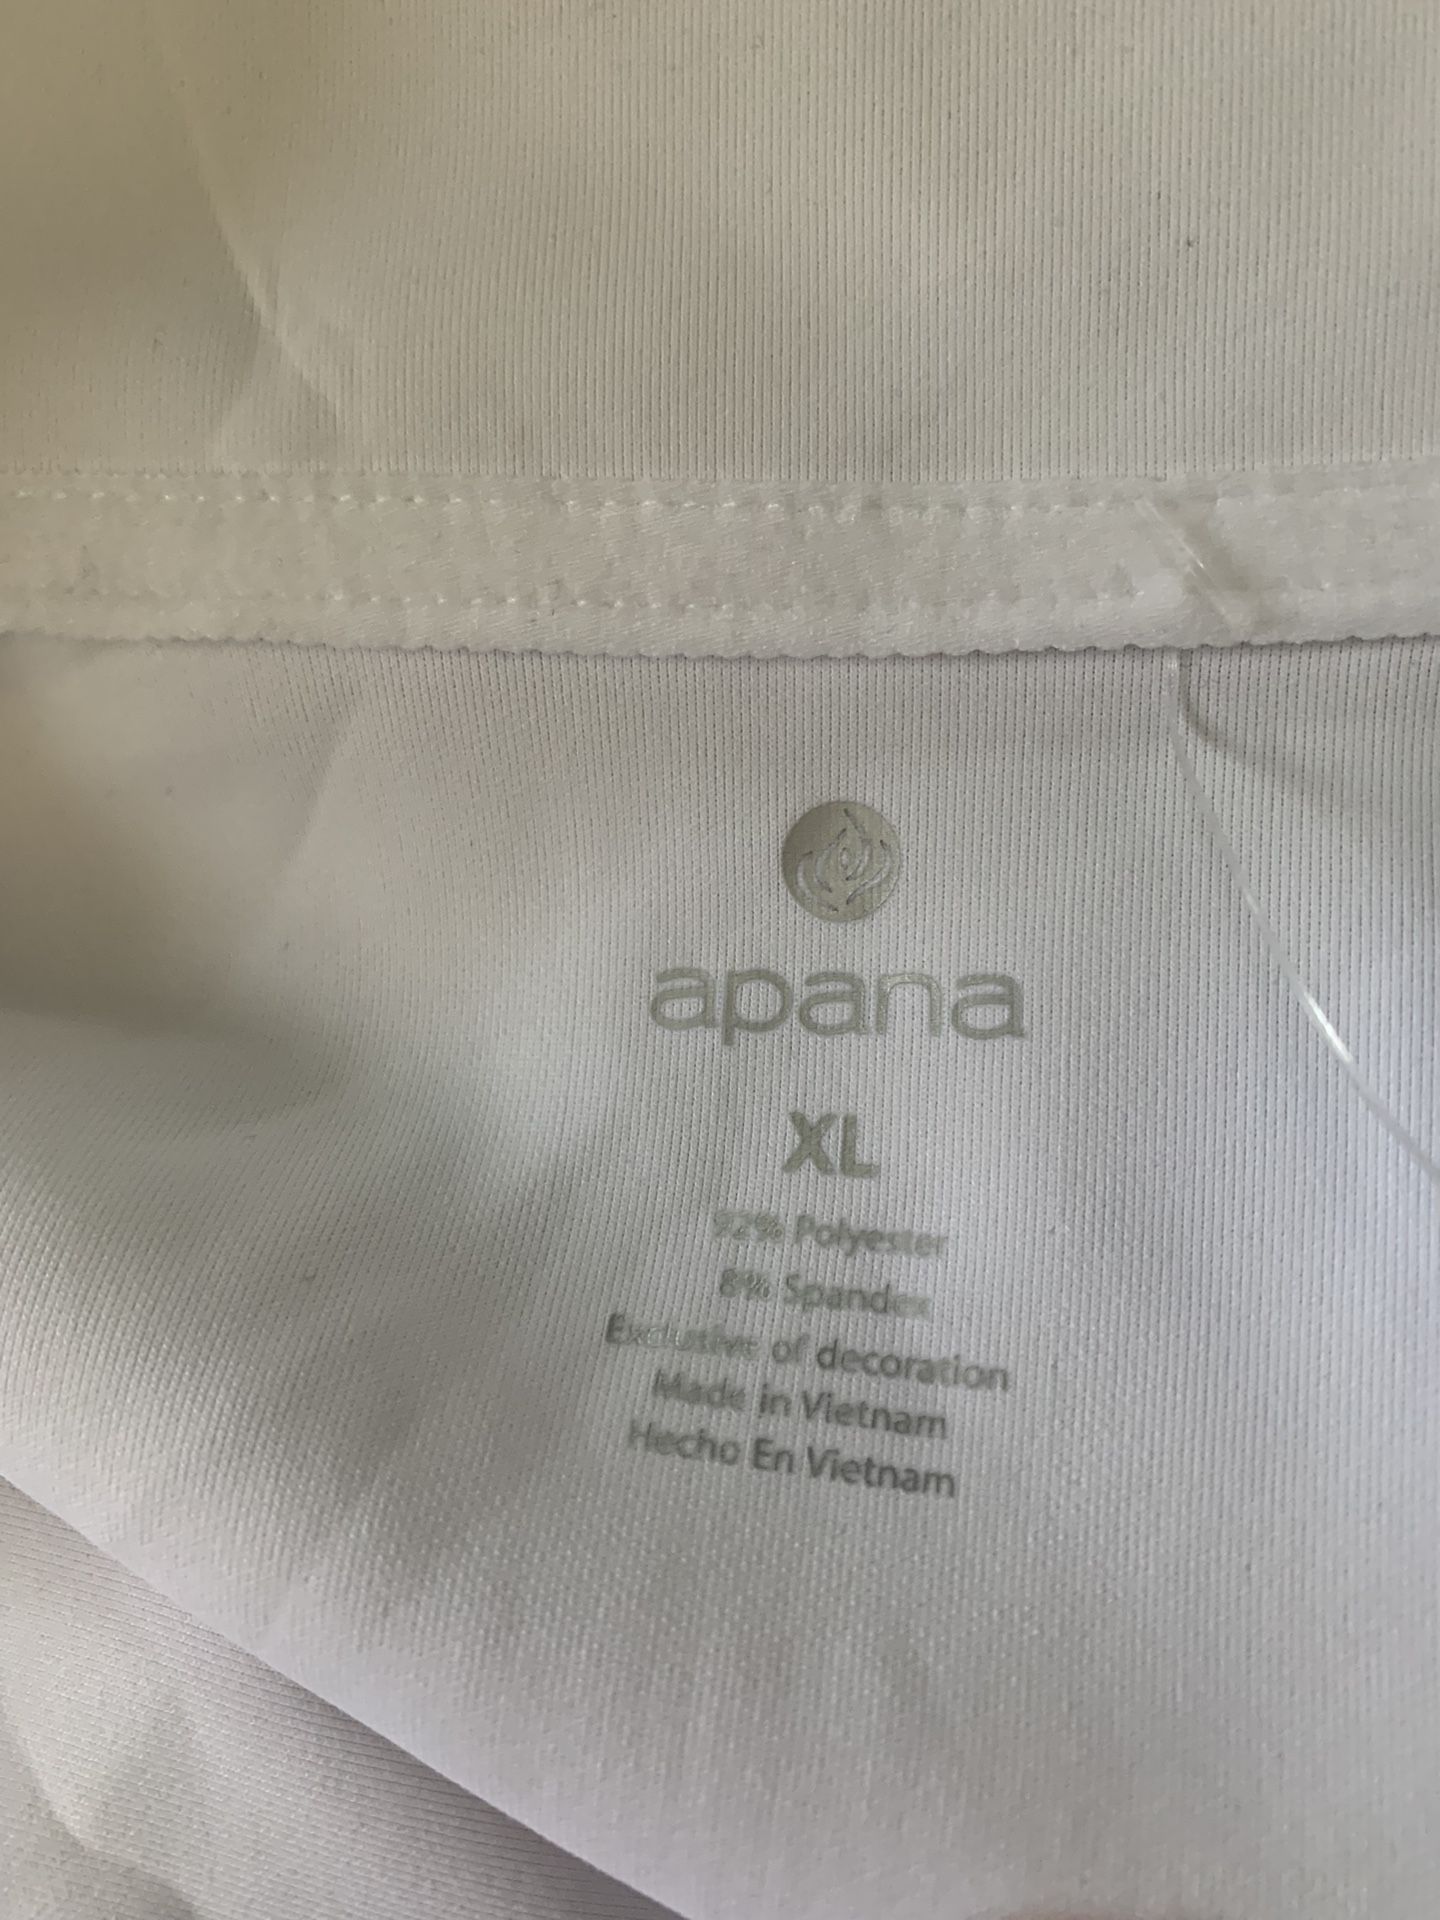 Apana Women's White Yoga Jacket Size XLarge for Sale in Fontana